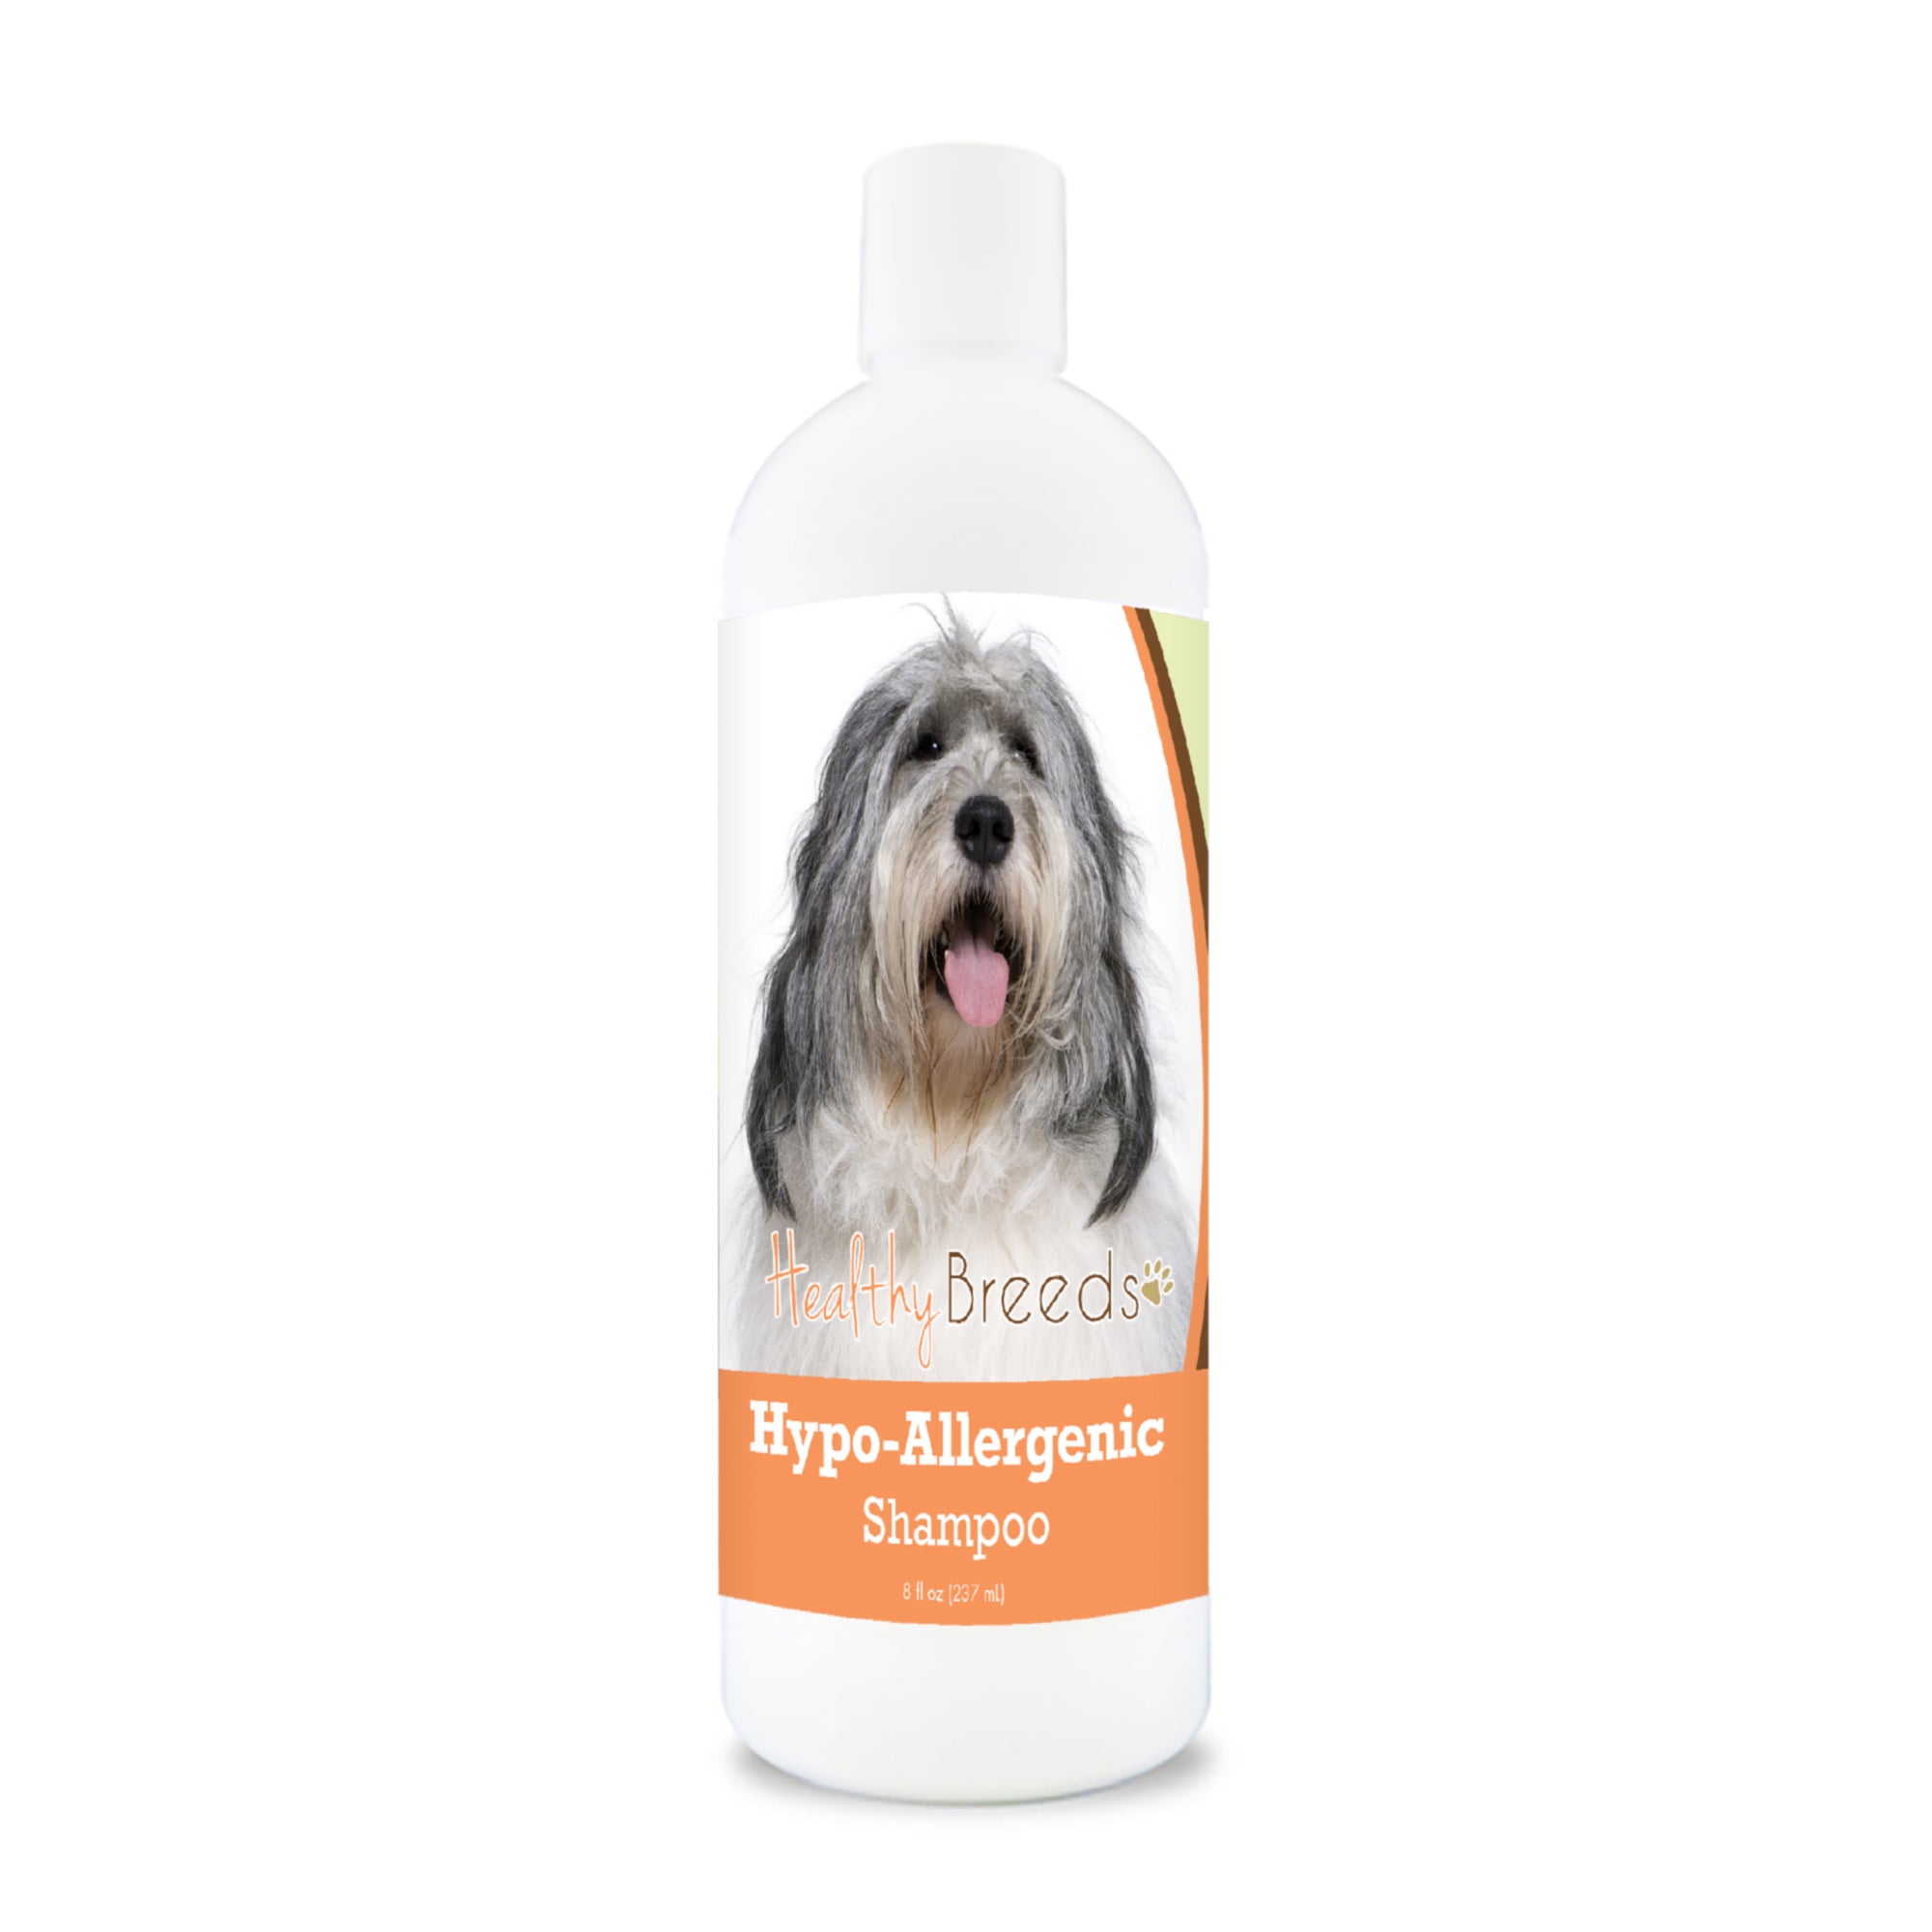 Polish Lowland Sheepdog Hypo-Allergenic Shampoo 8 oz